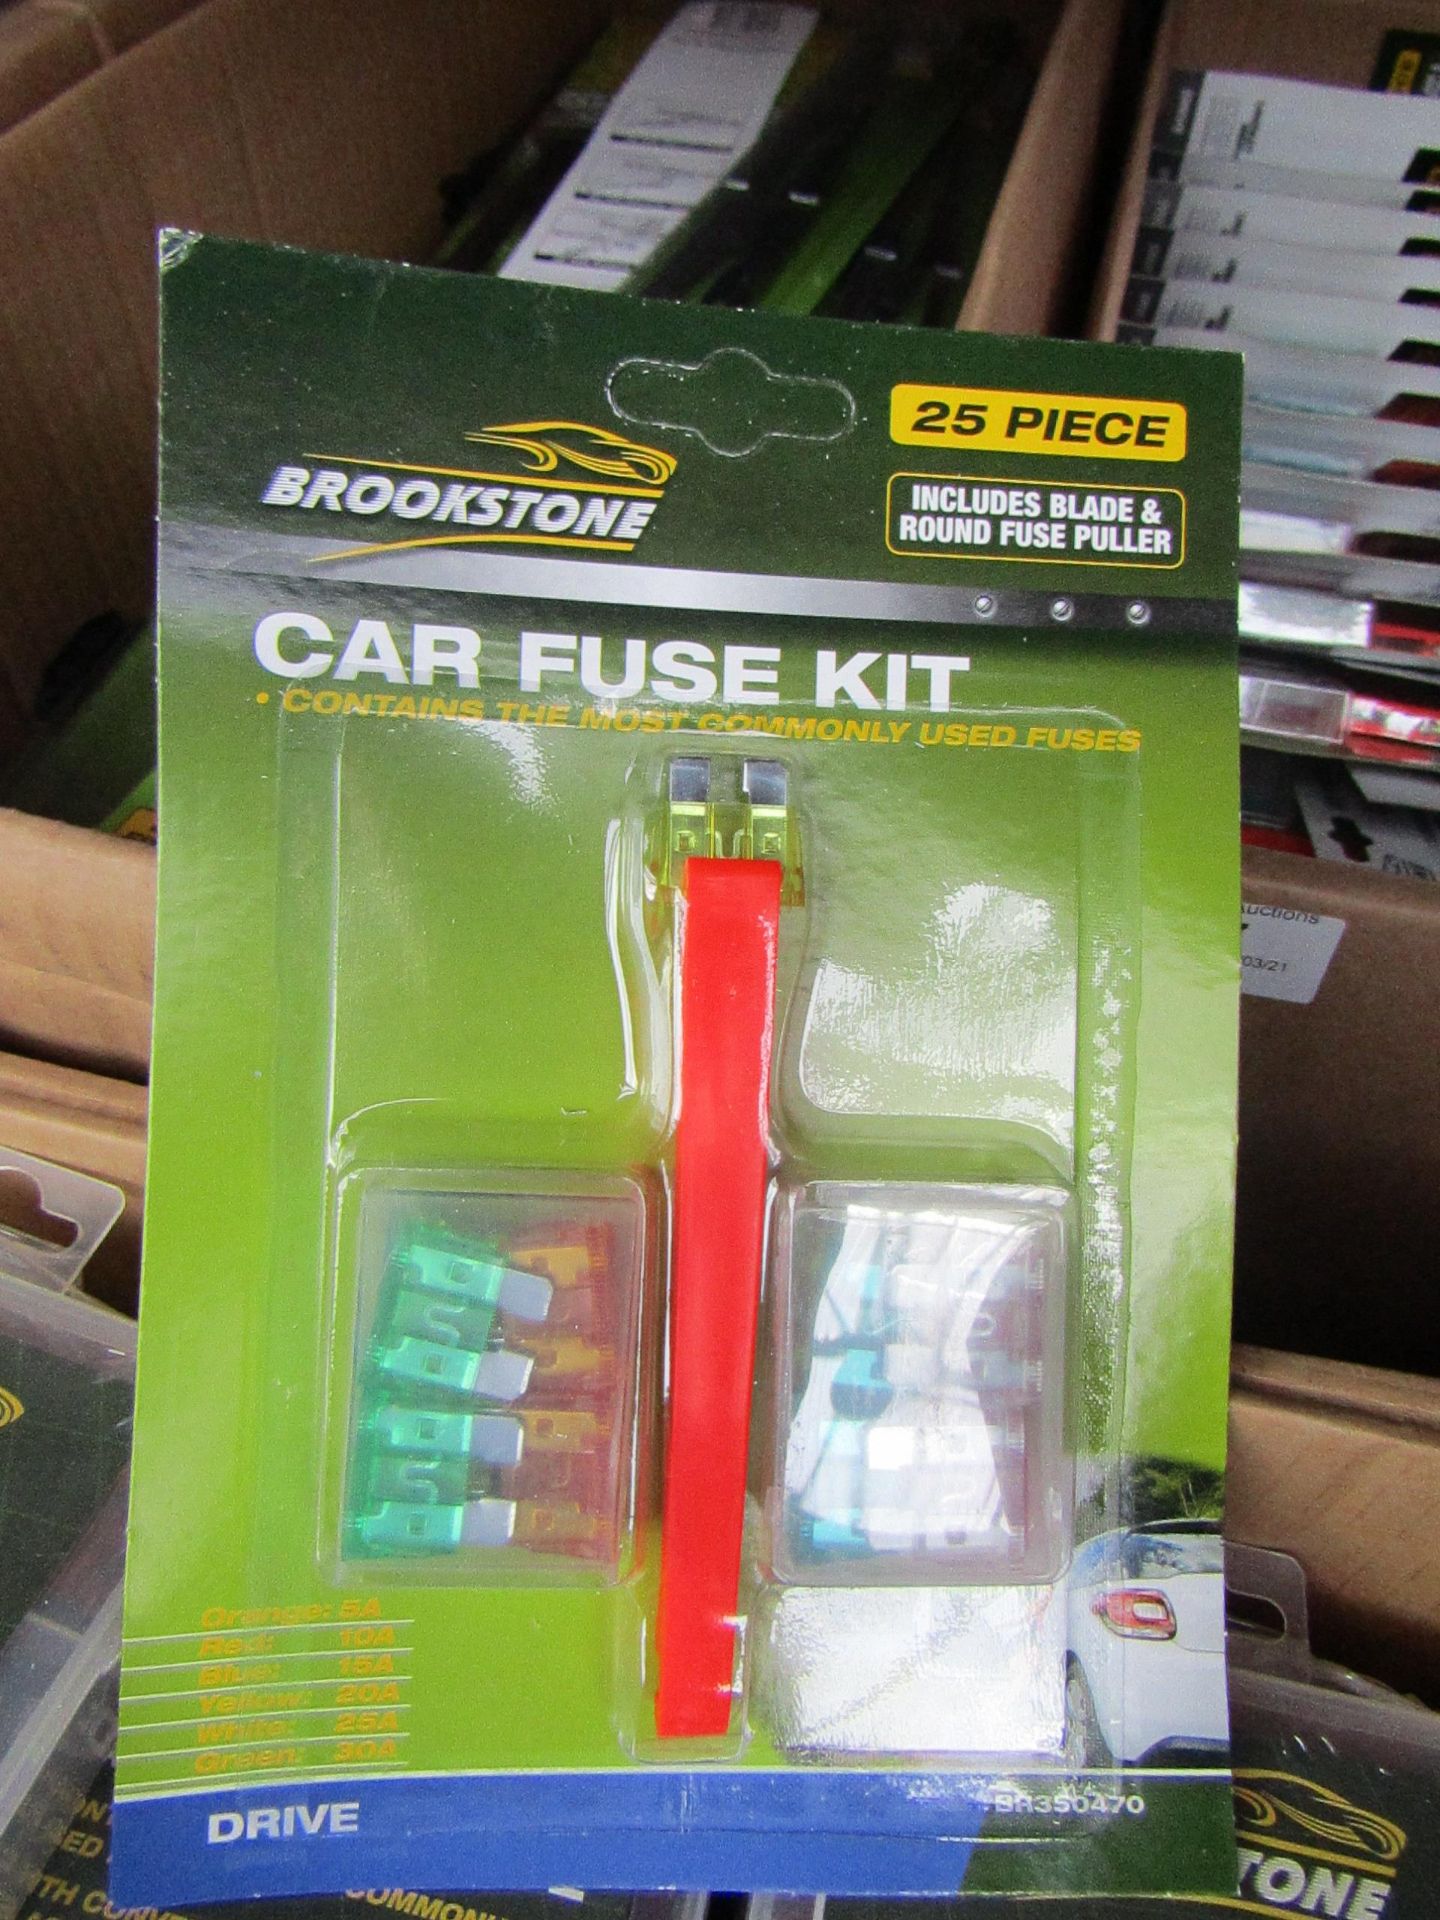 4x Brookstone 25 piece car fuse kits - New.